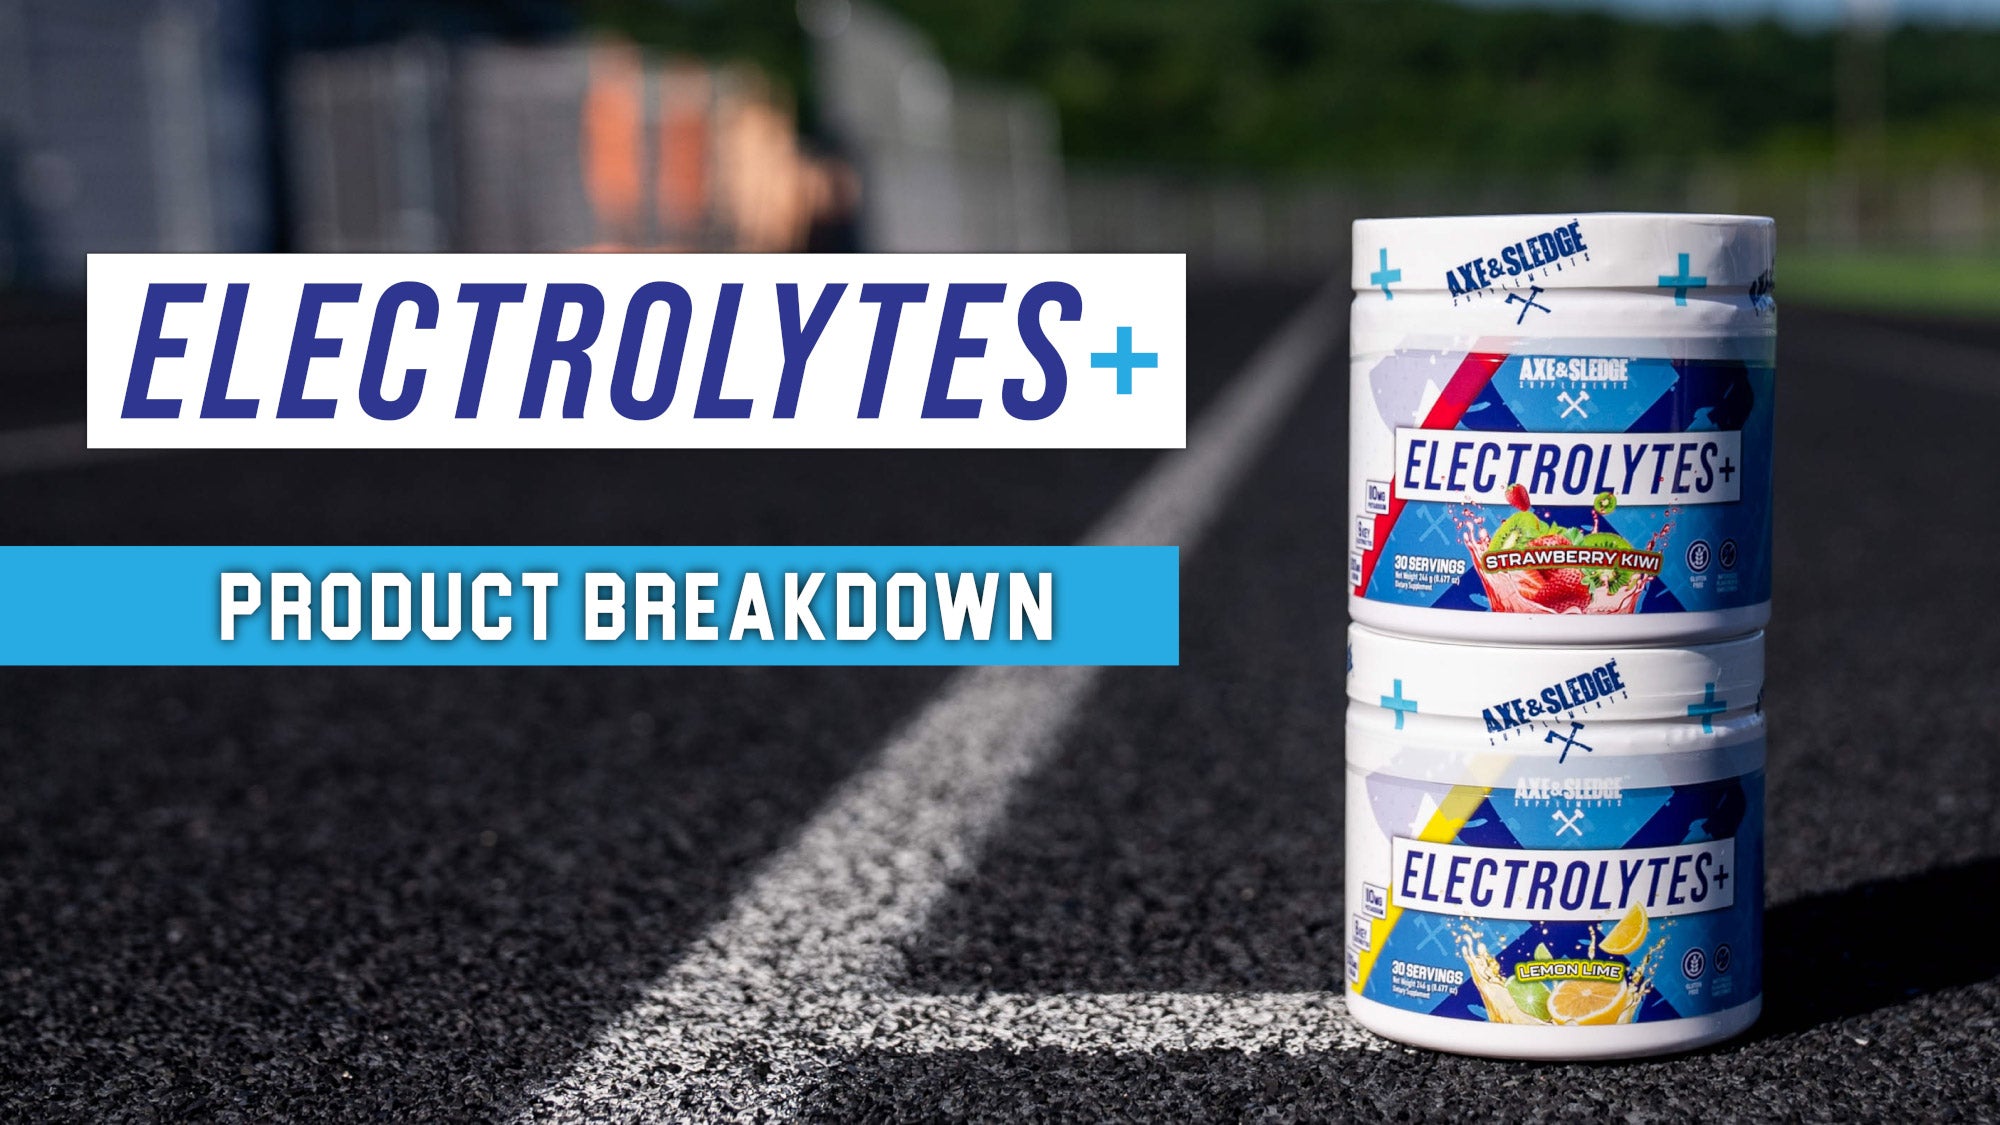 Electrolytes+ Product Breakdown